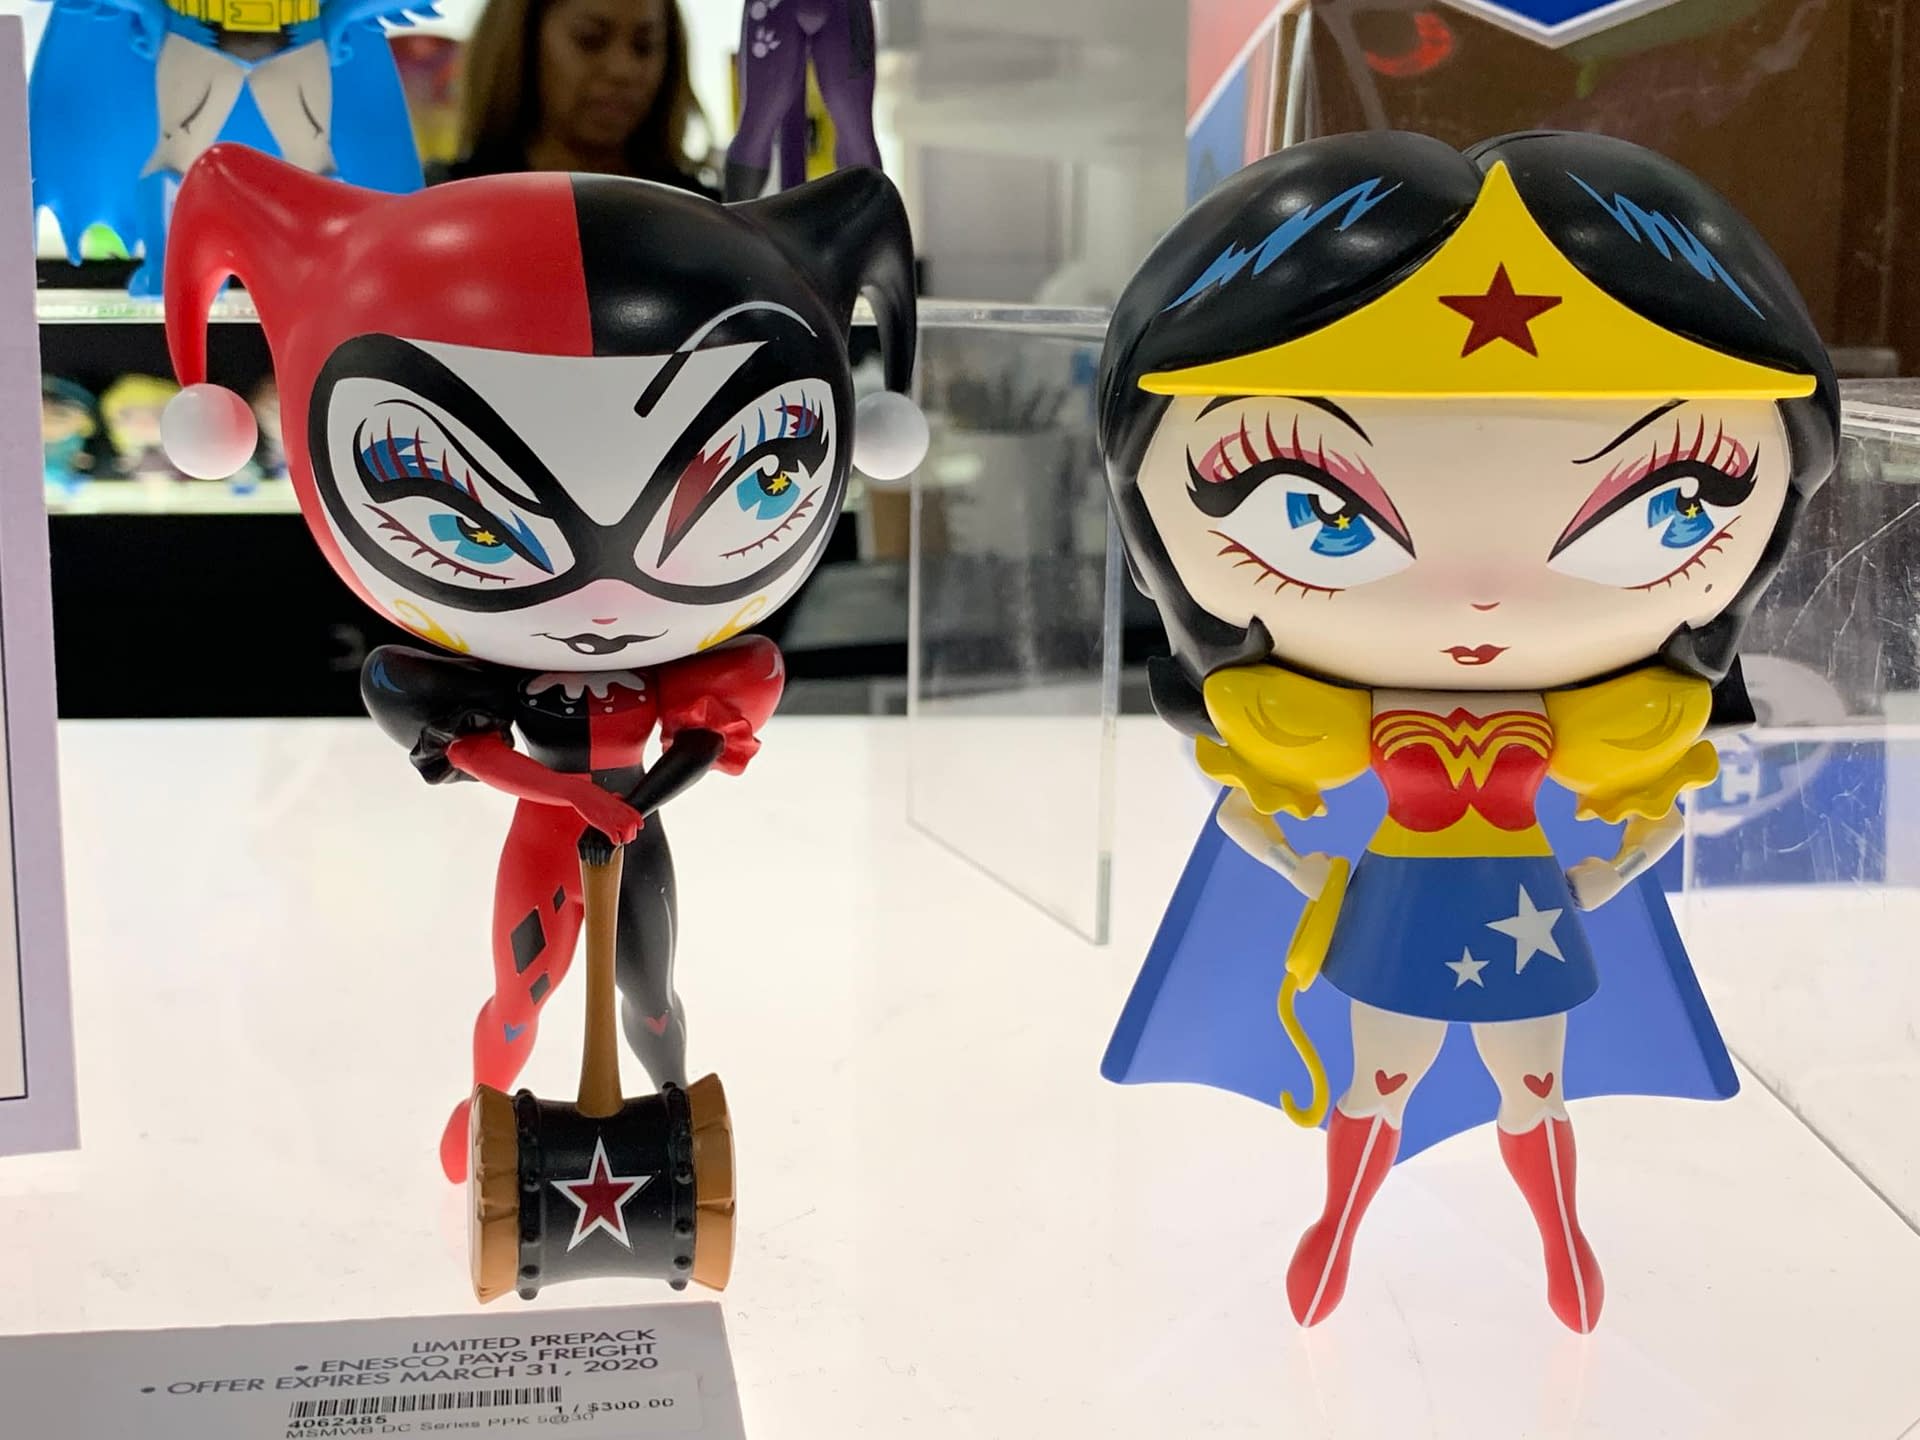 New York Toy Fair 2020: 43 Photos from the Enesco Booth